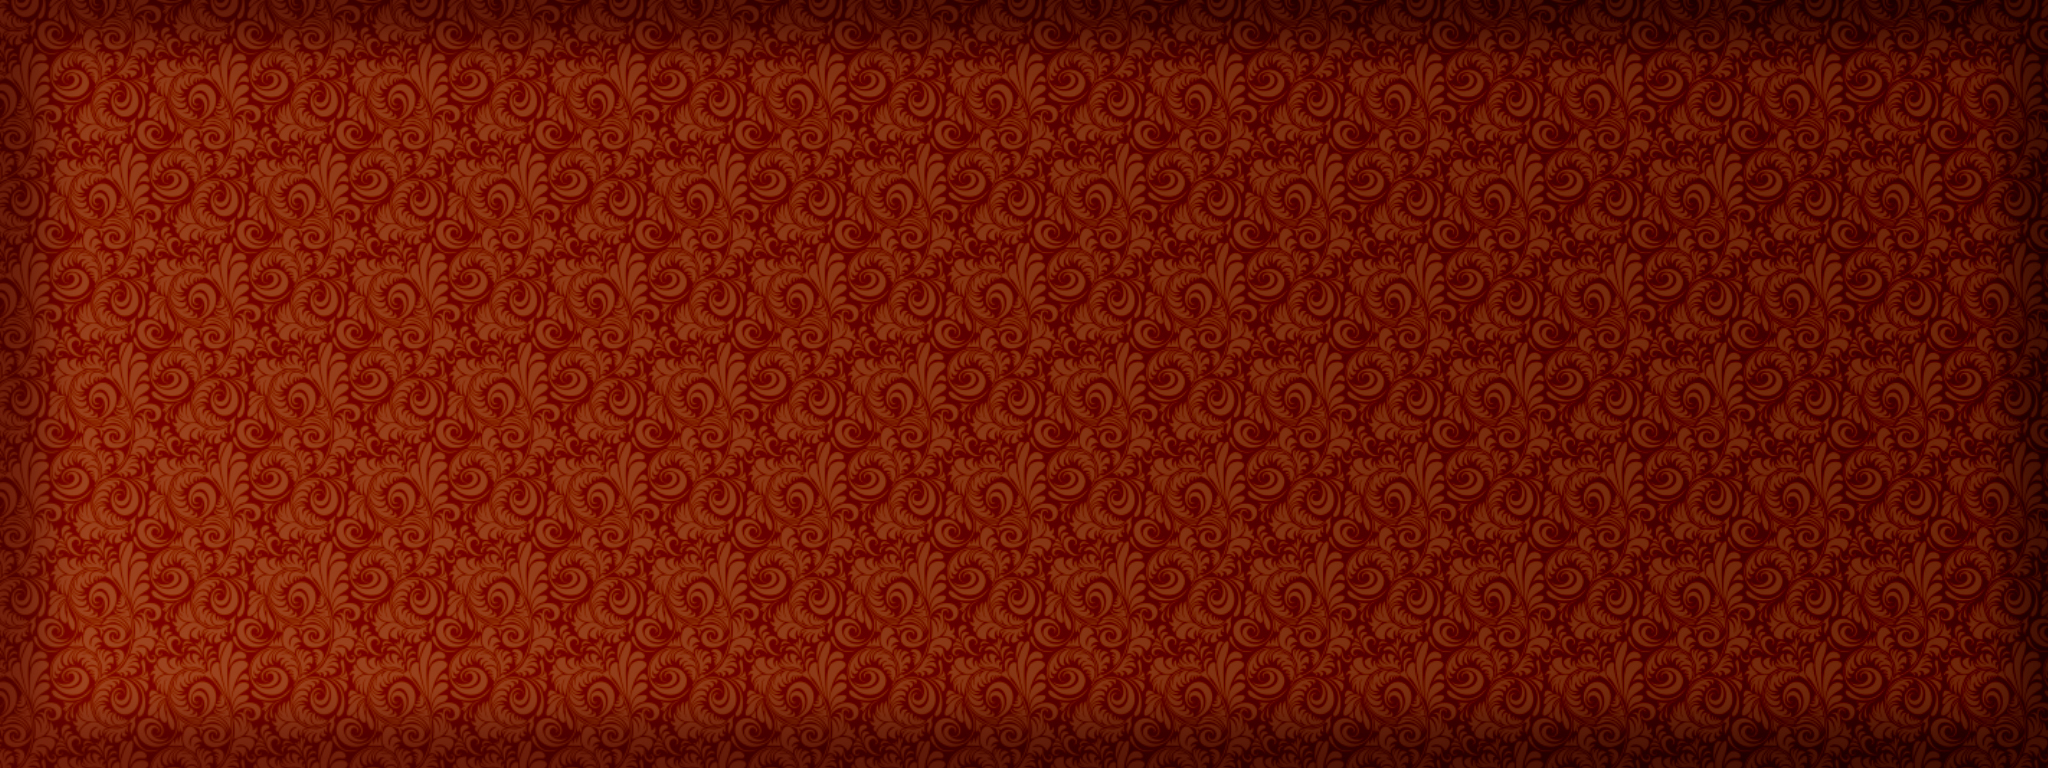 Victorian Wallpaper hd Wallpaper download Free Wallpaper